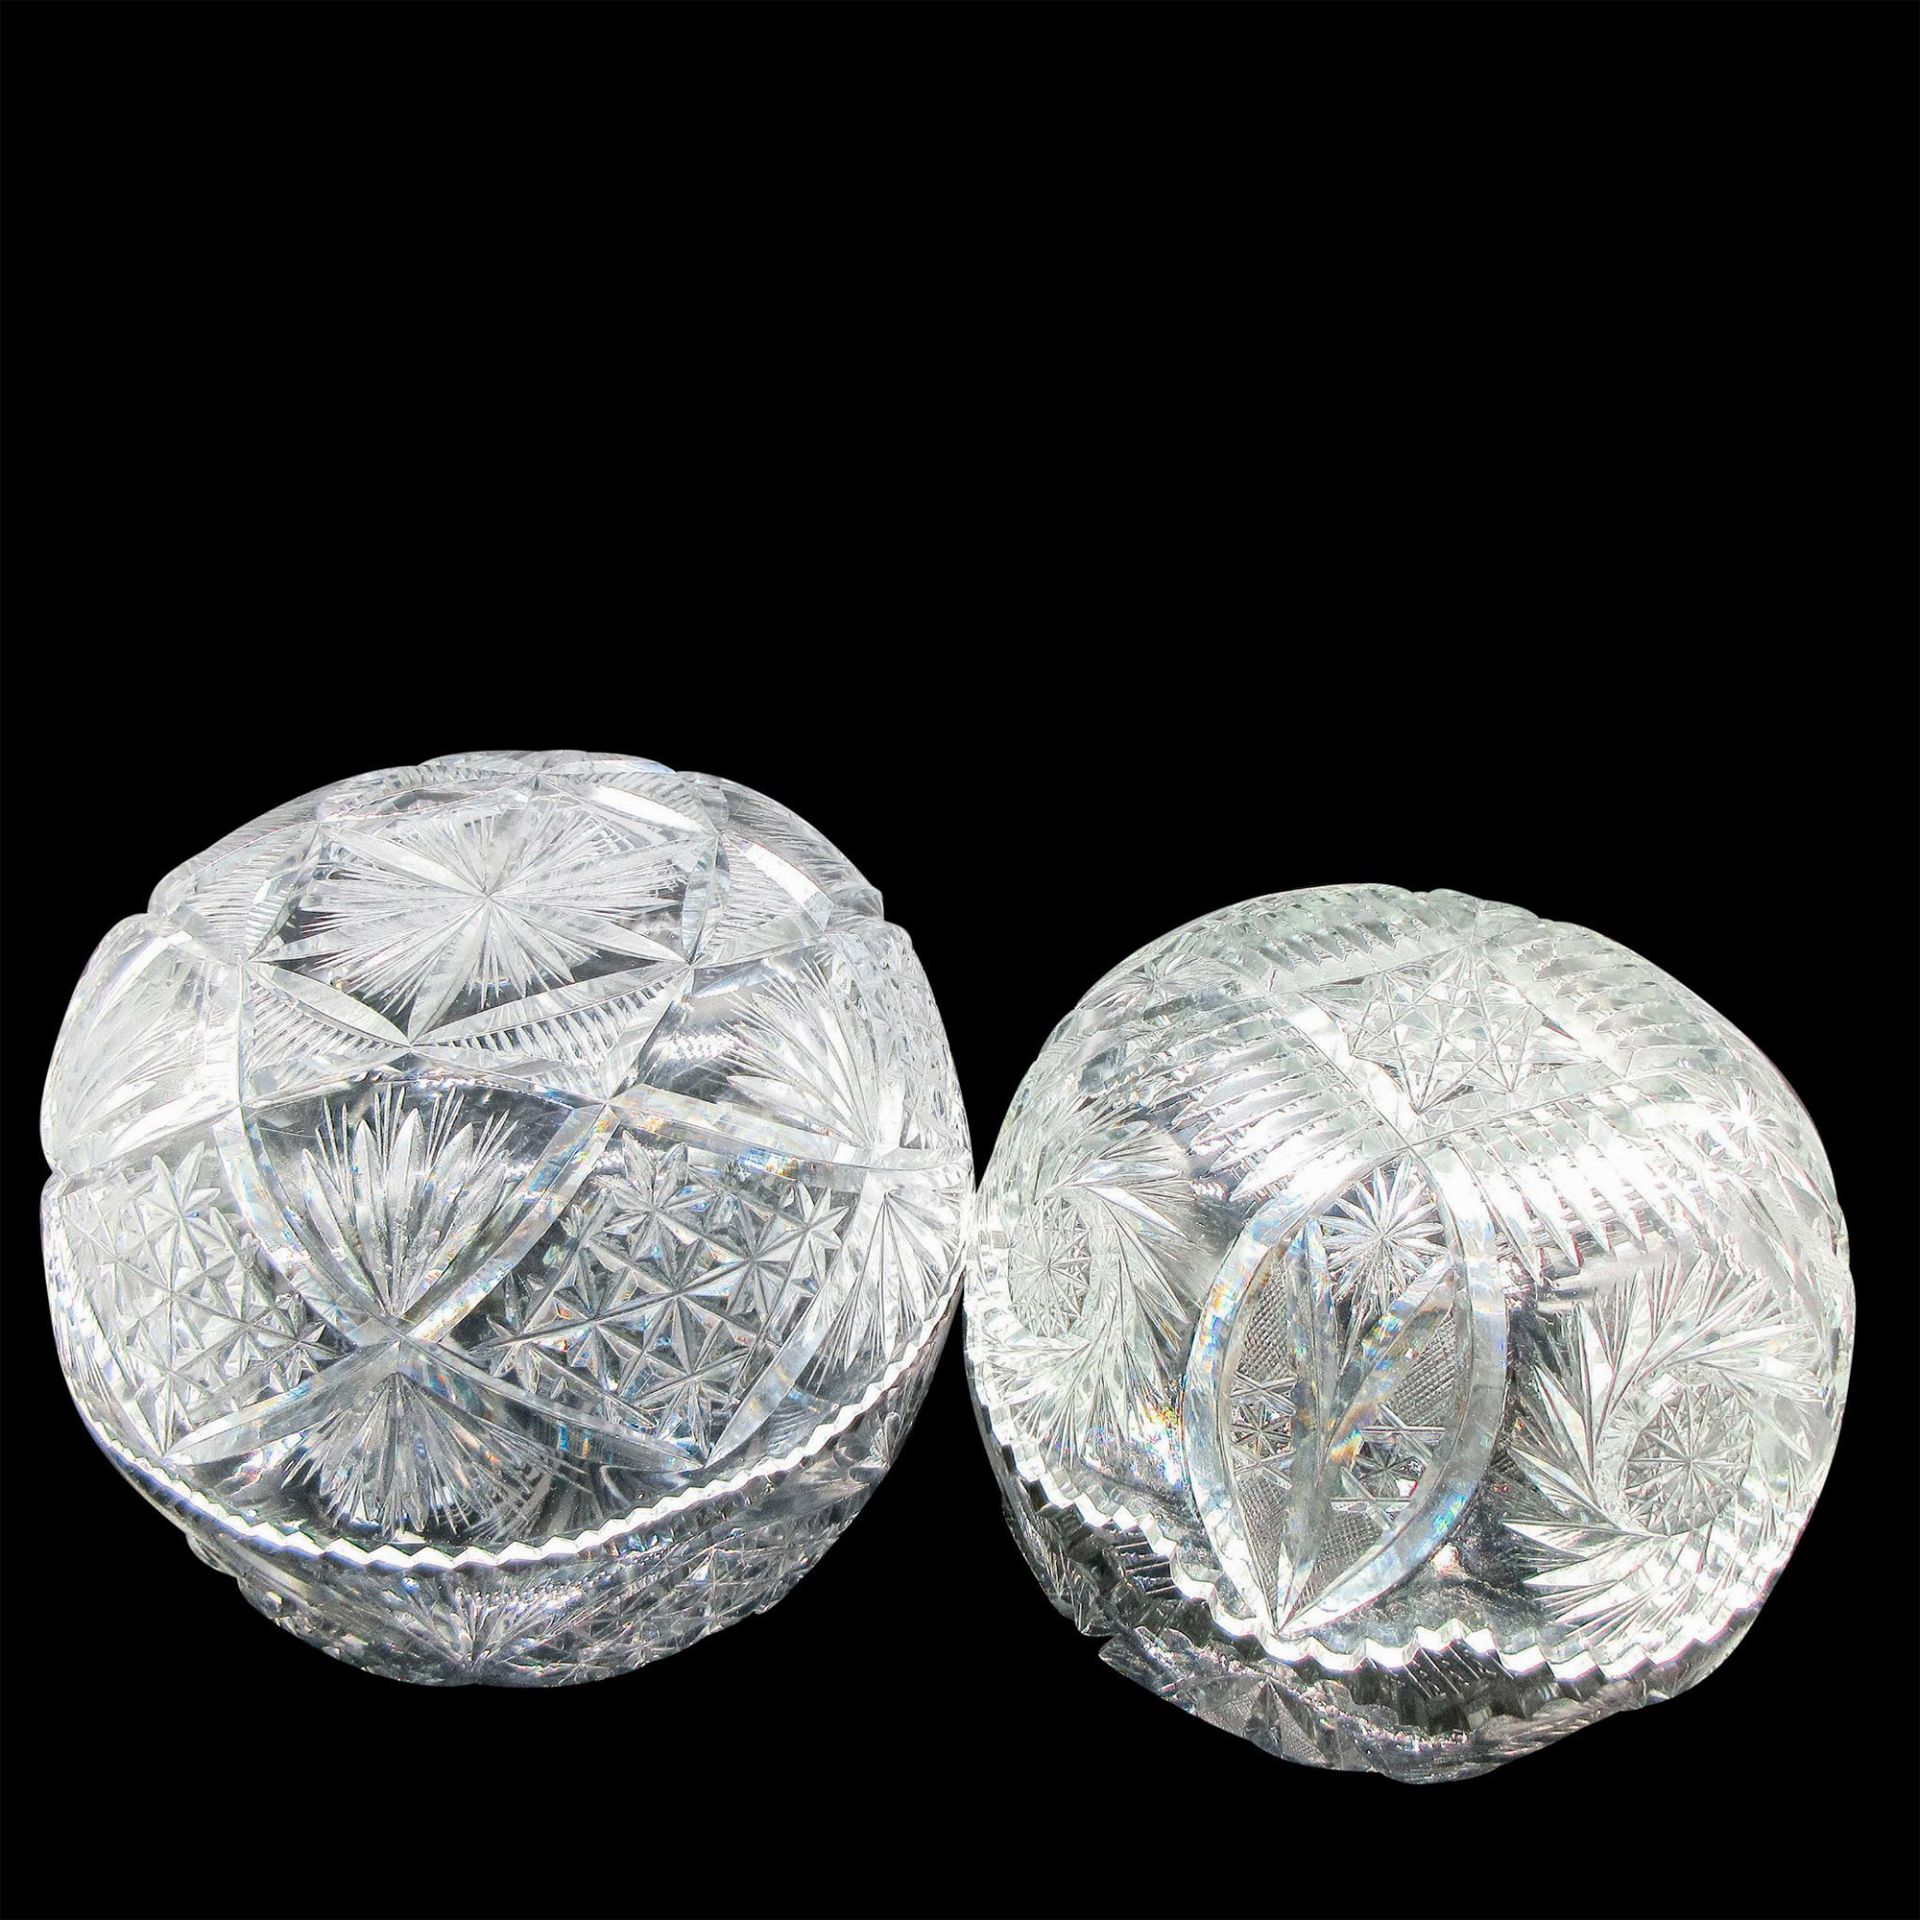 2pc American Brilliant Cut Crystal Bowls - Image 3 of 3